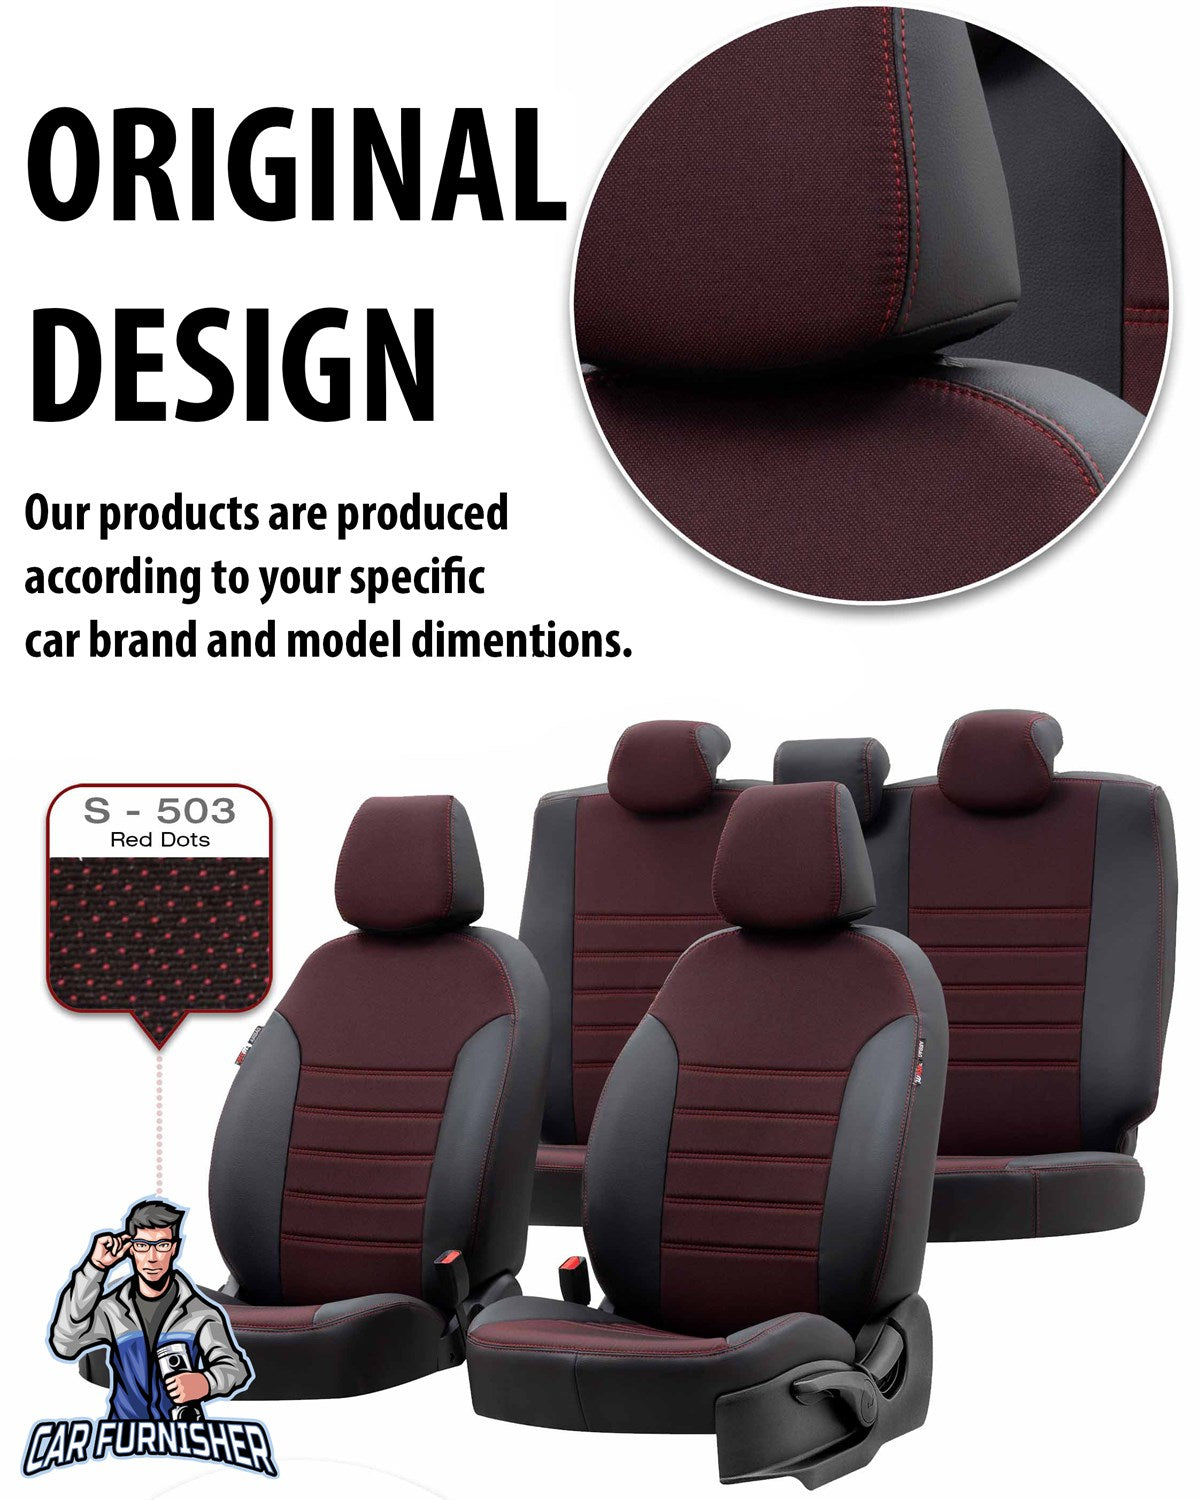 Peugeot 208 Seat Covers Paris Leather & Jacquard Design Dark Beige Leather & Jacquard Fabric